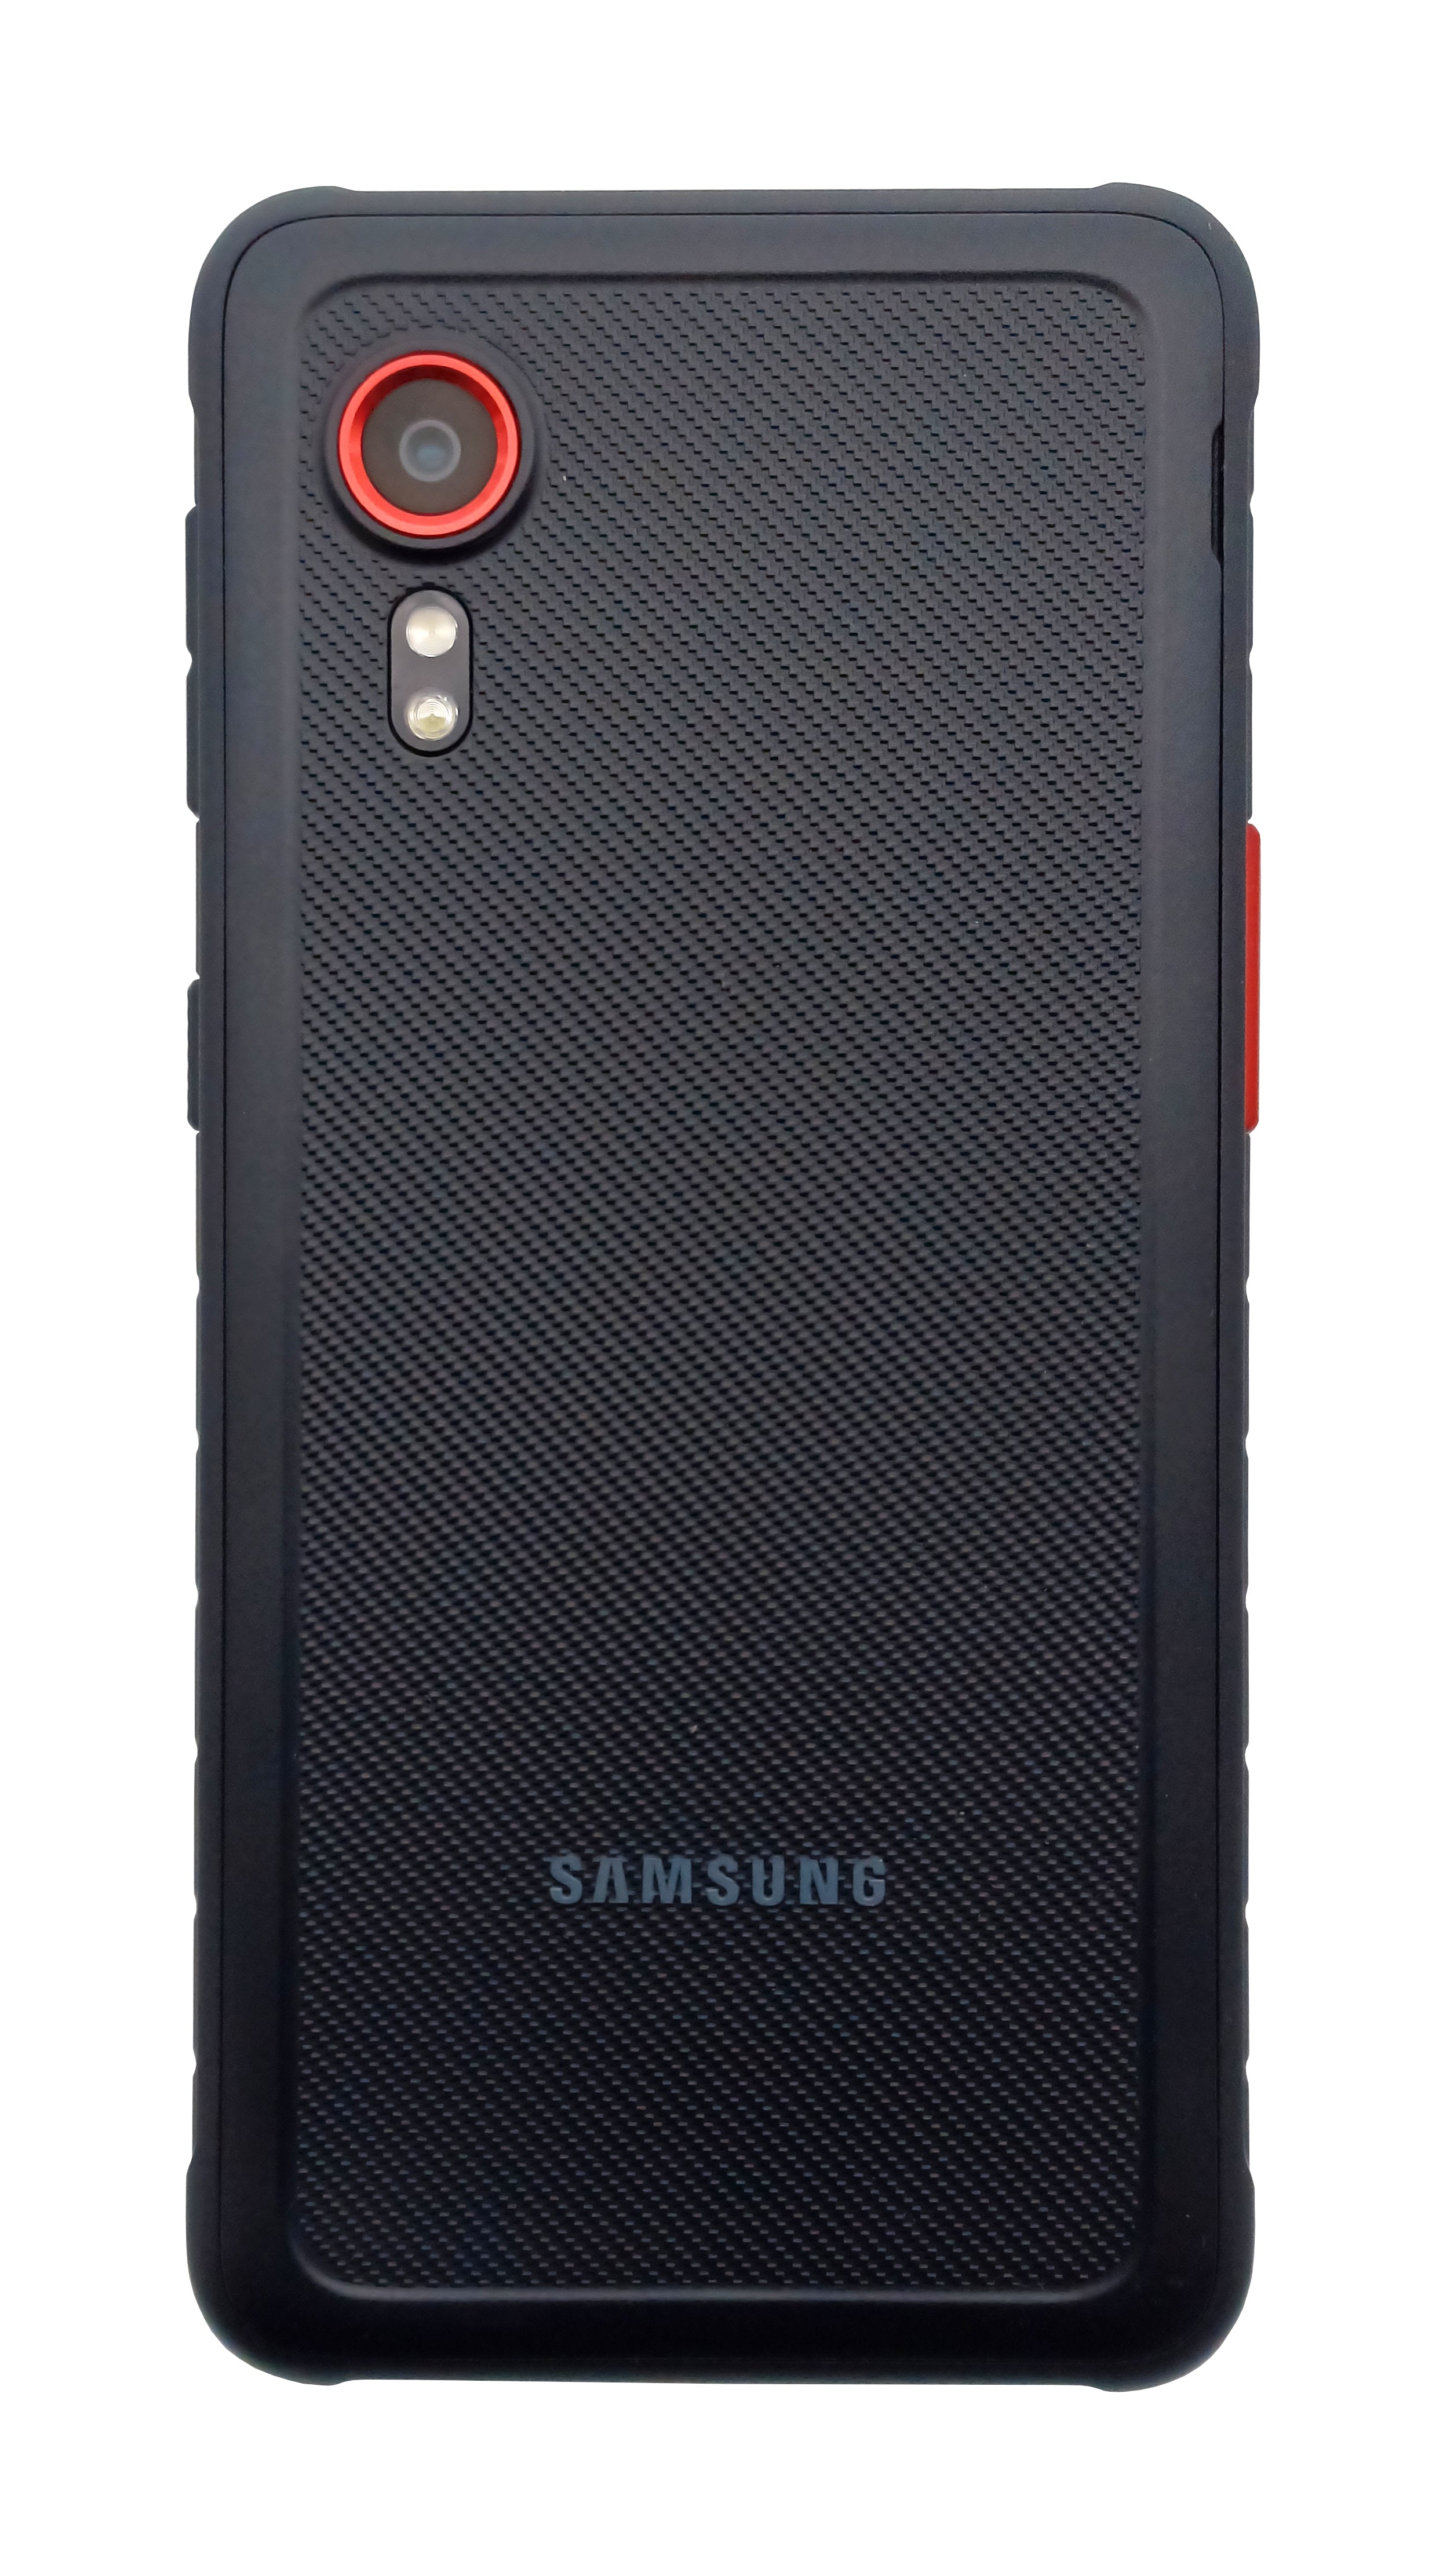 Samsung Galaxy XCover 5 Smartphone, 64GB, Network Unlocked, Black, SM-G525F